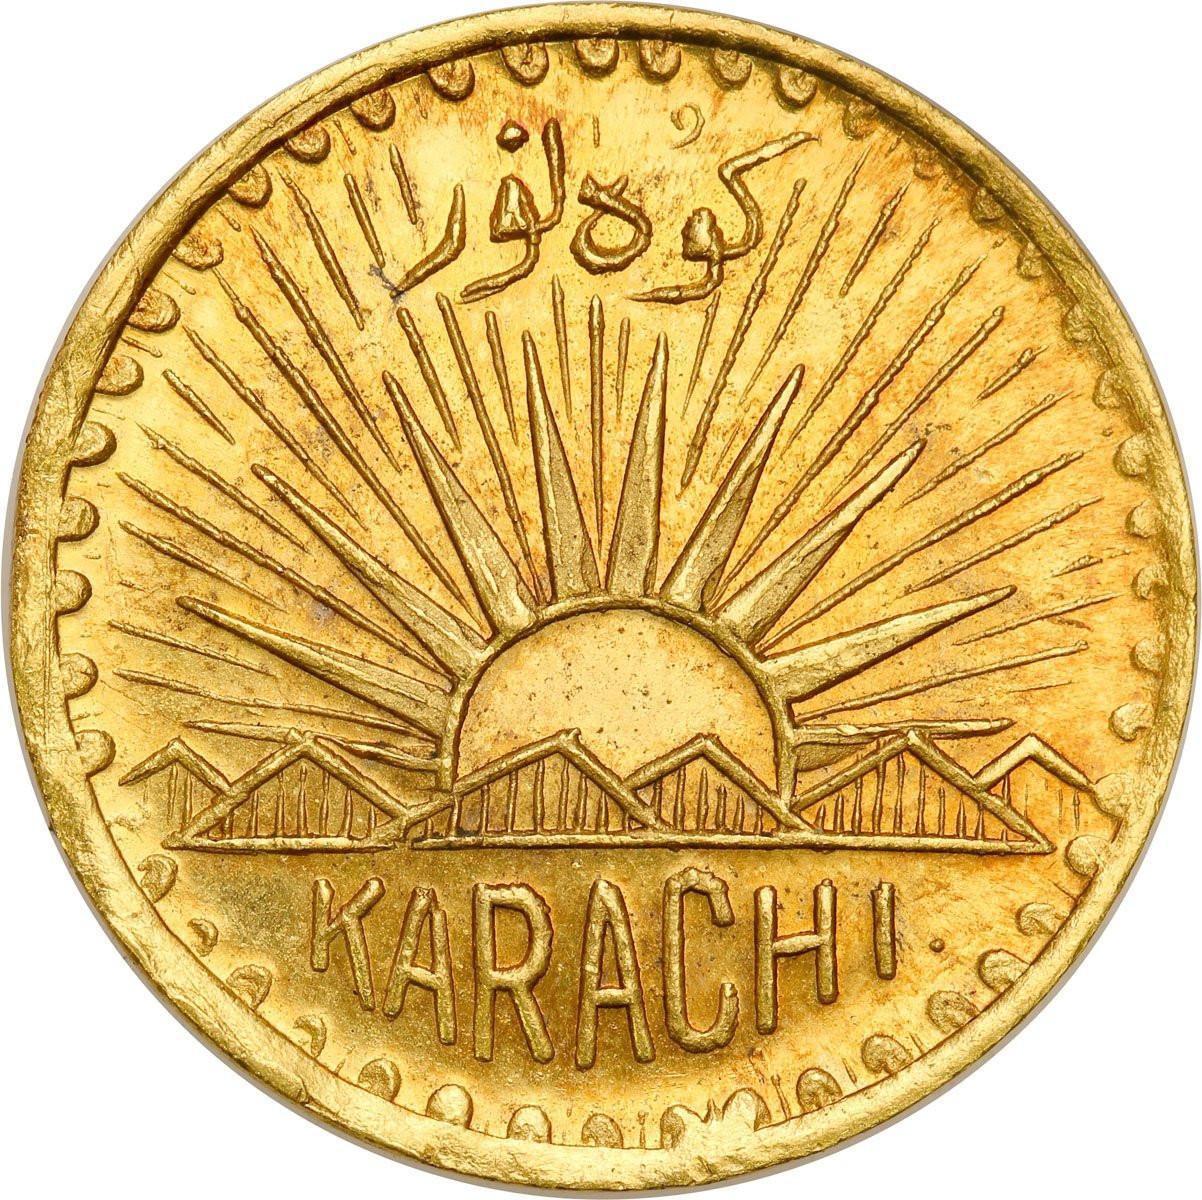 Pakistan Karachi 1 Tola